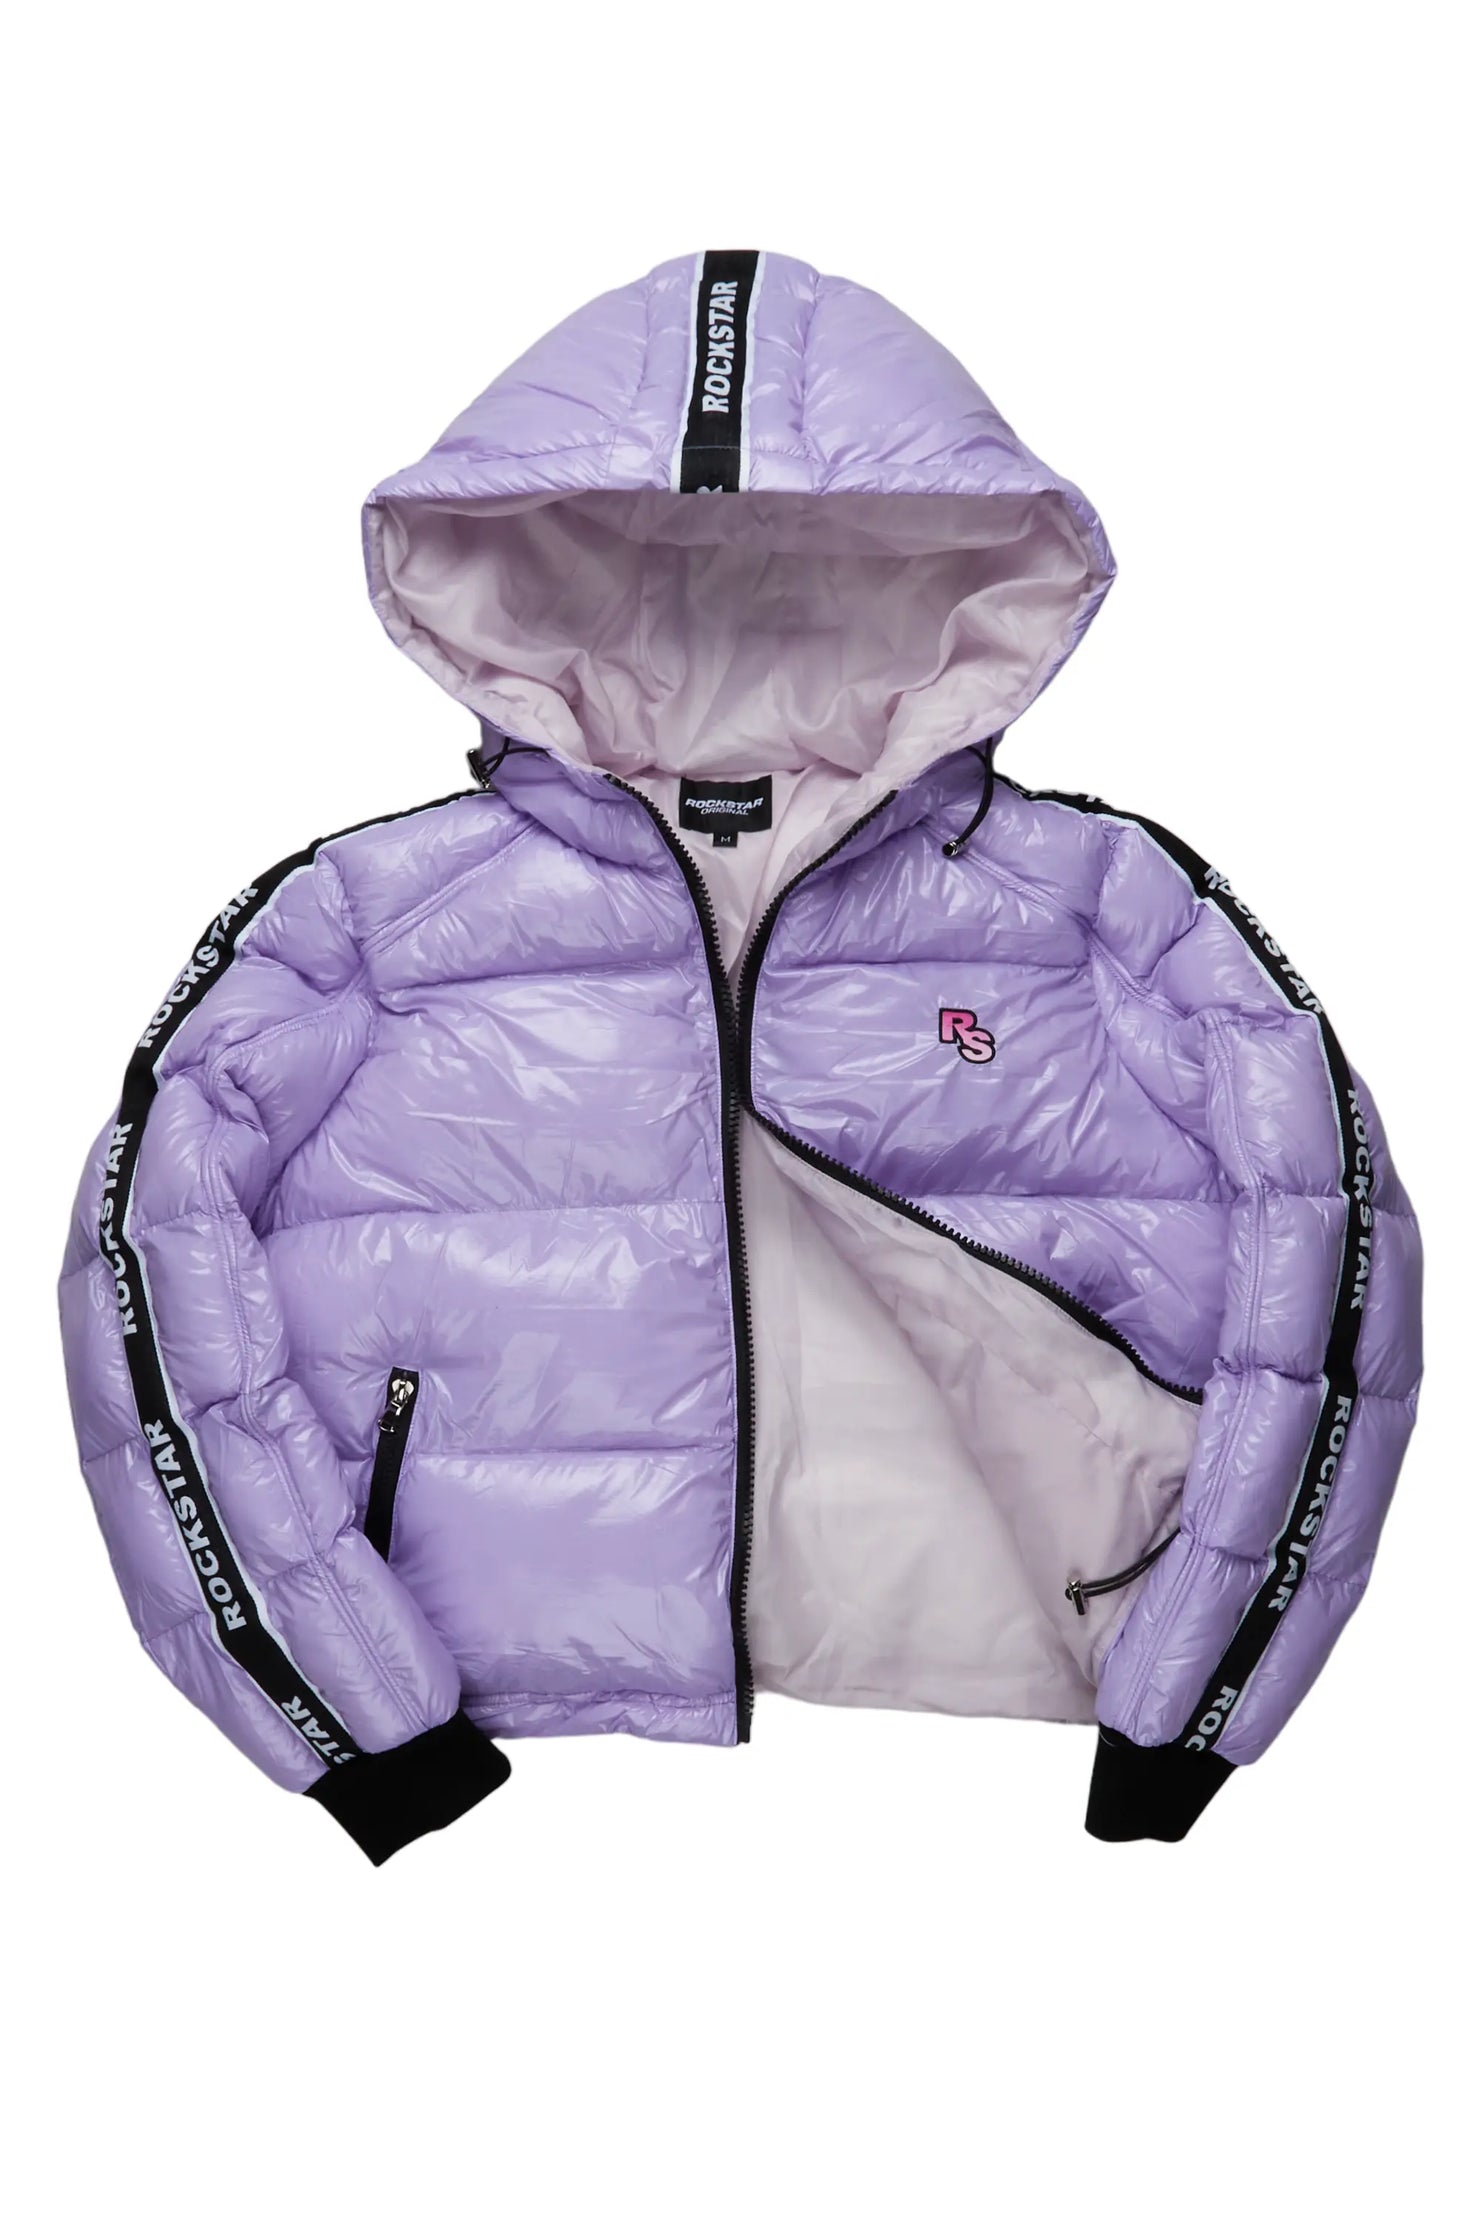 Jackey Lavender Puffer Jacket